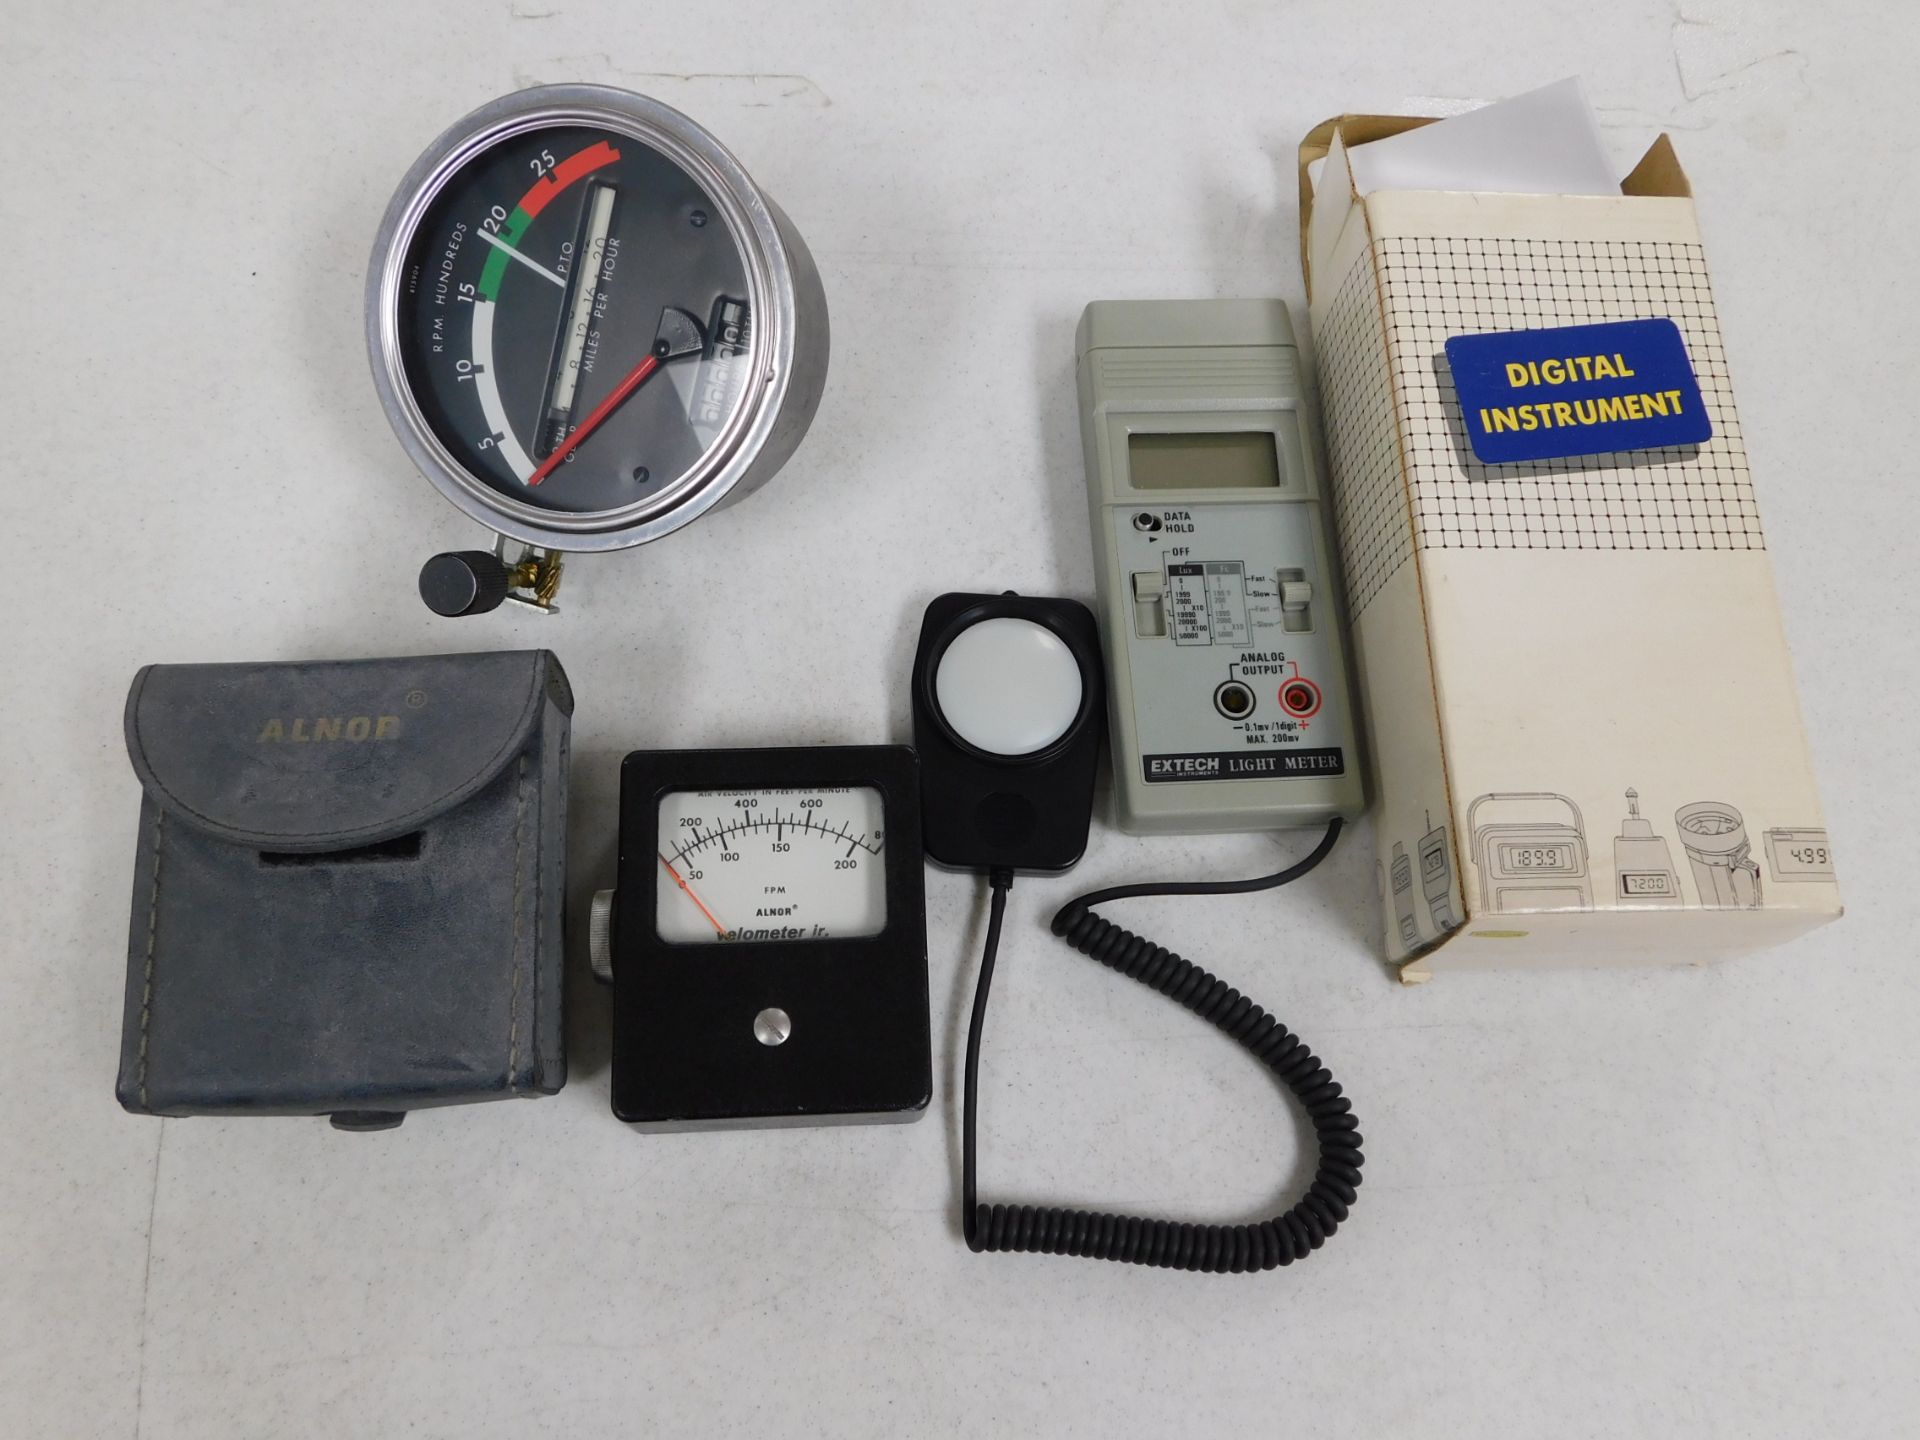 Almor Velometer, Tachometer, and Extech Digital Light Meter